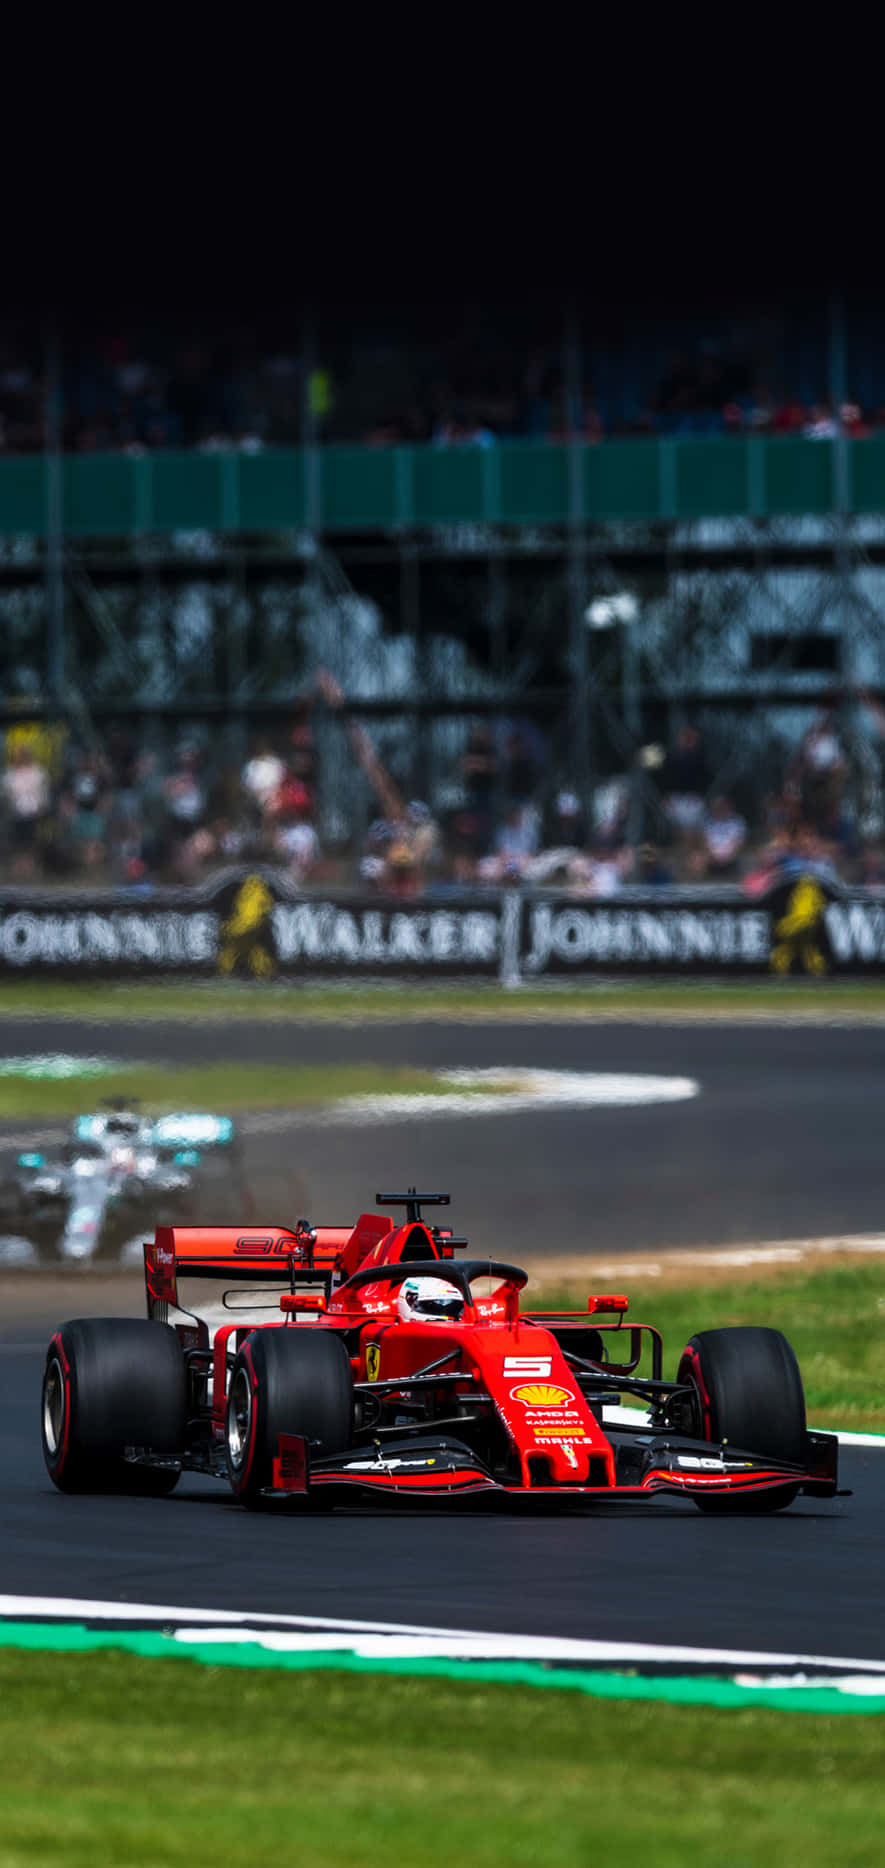 Ferrari F1 Car Ready to Take the Track Wallpaper